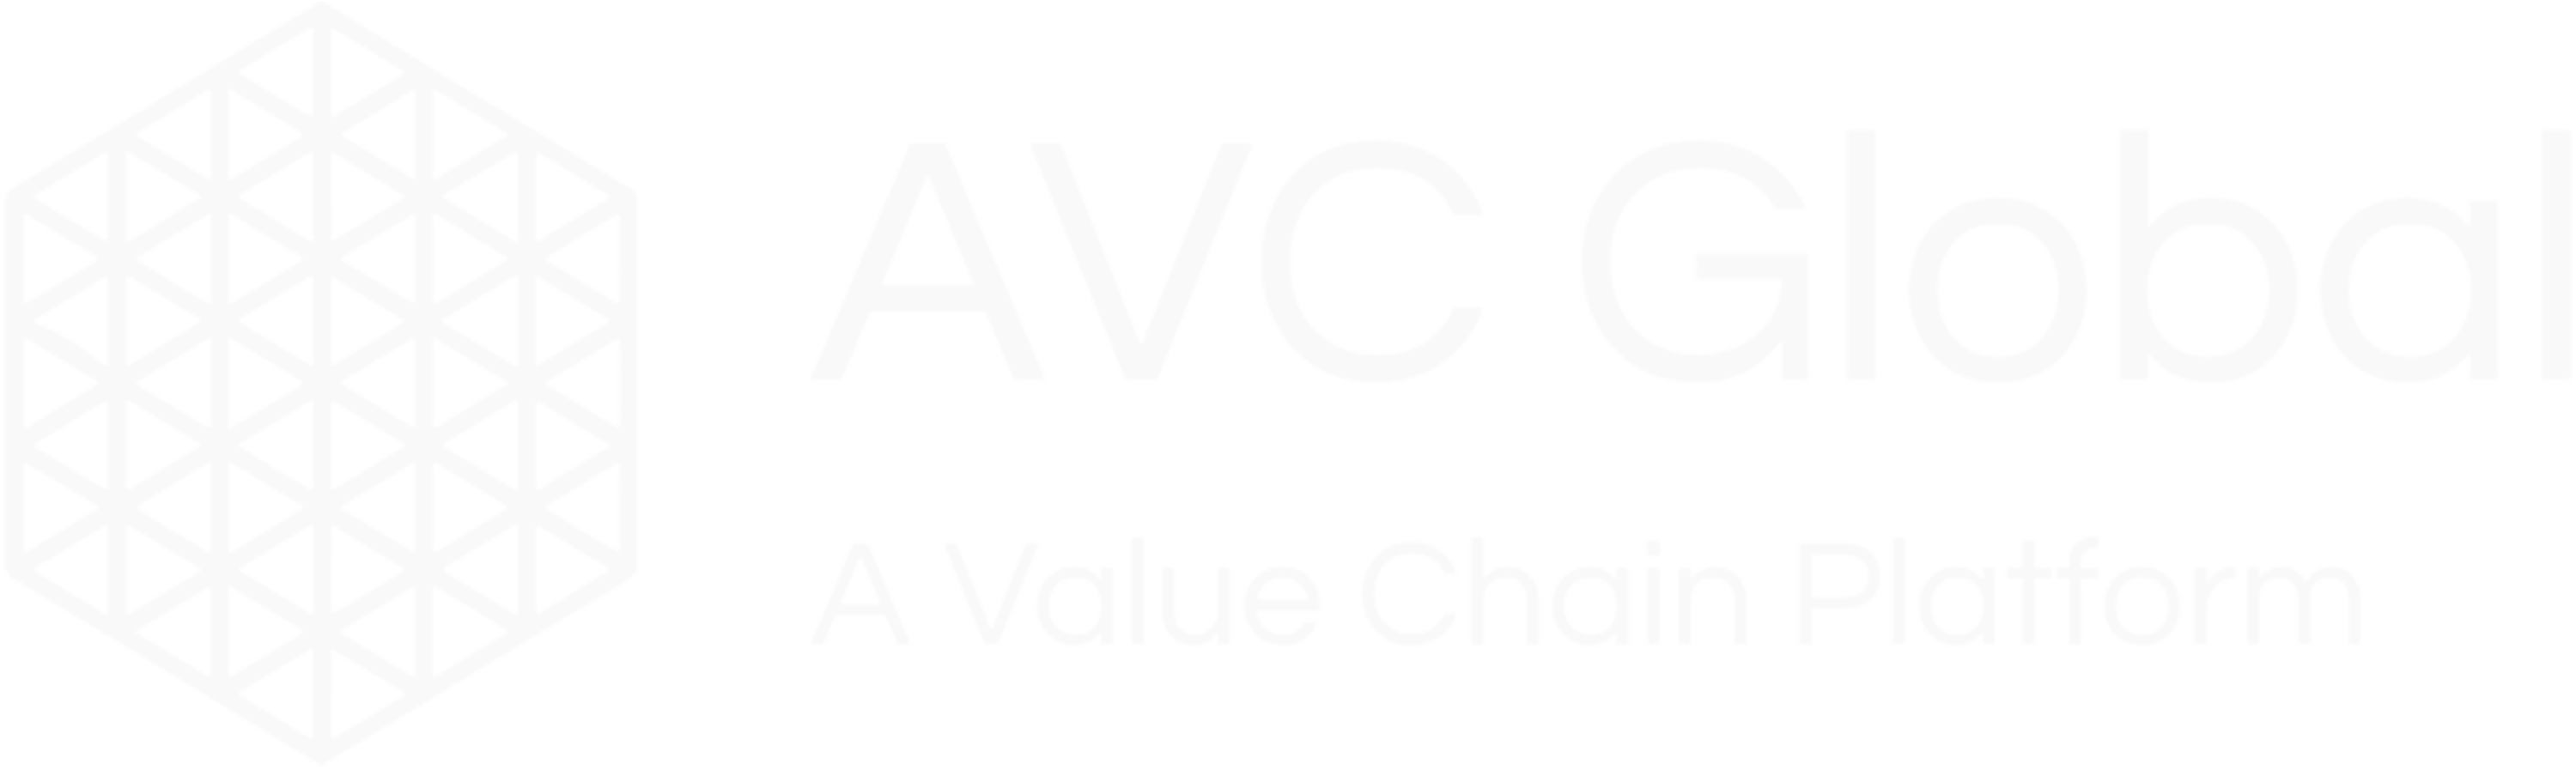 AVC Global logo